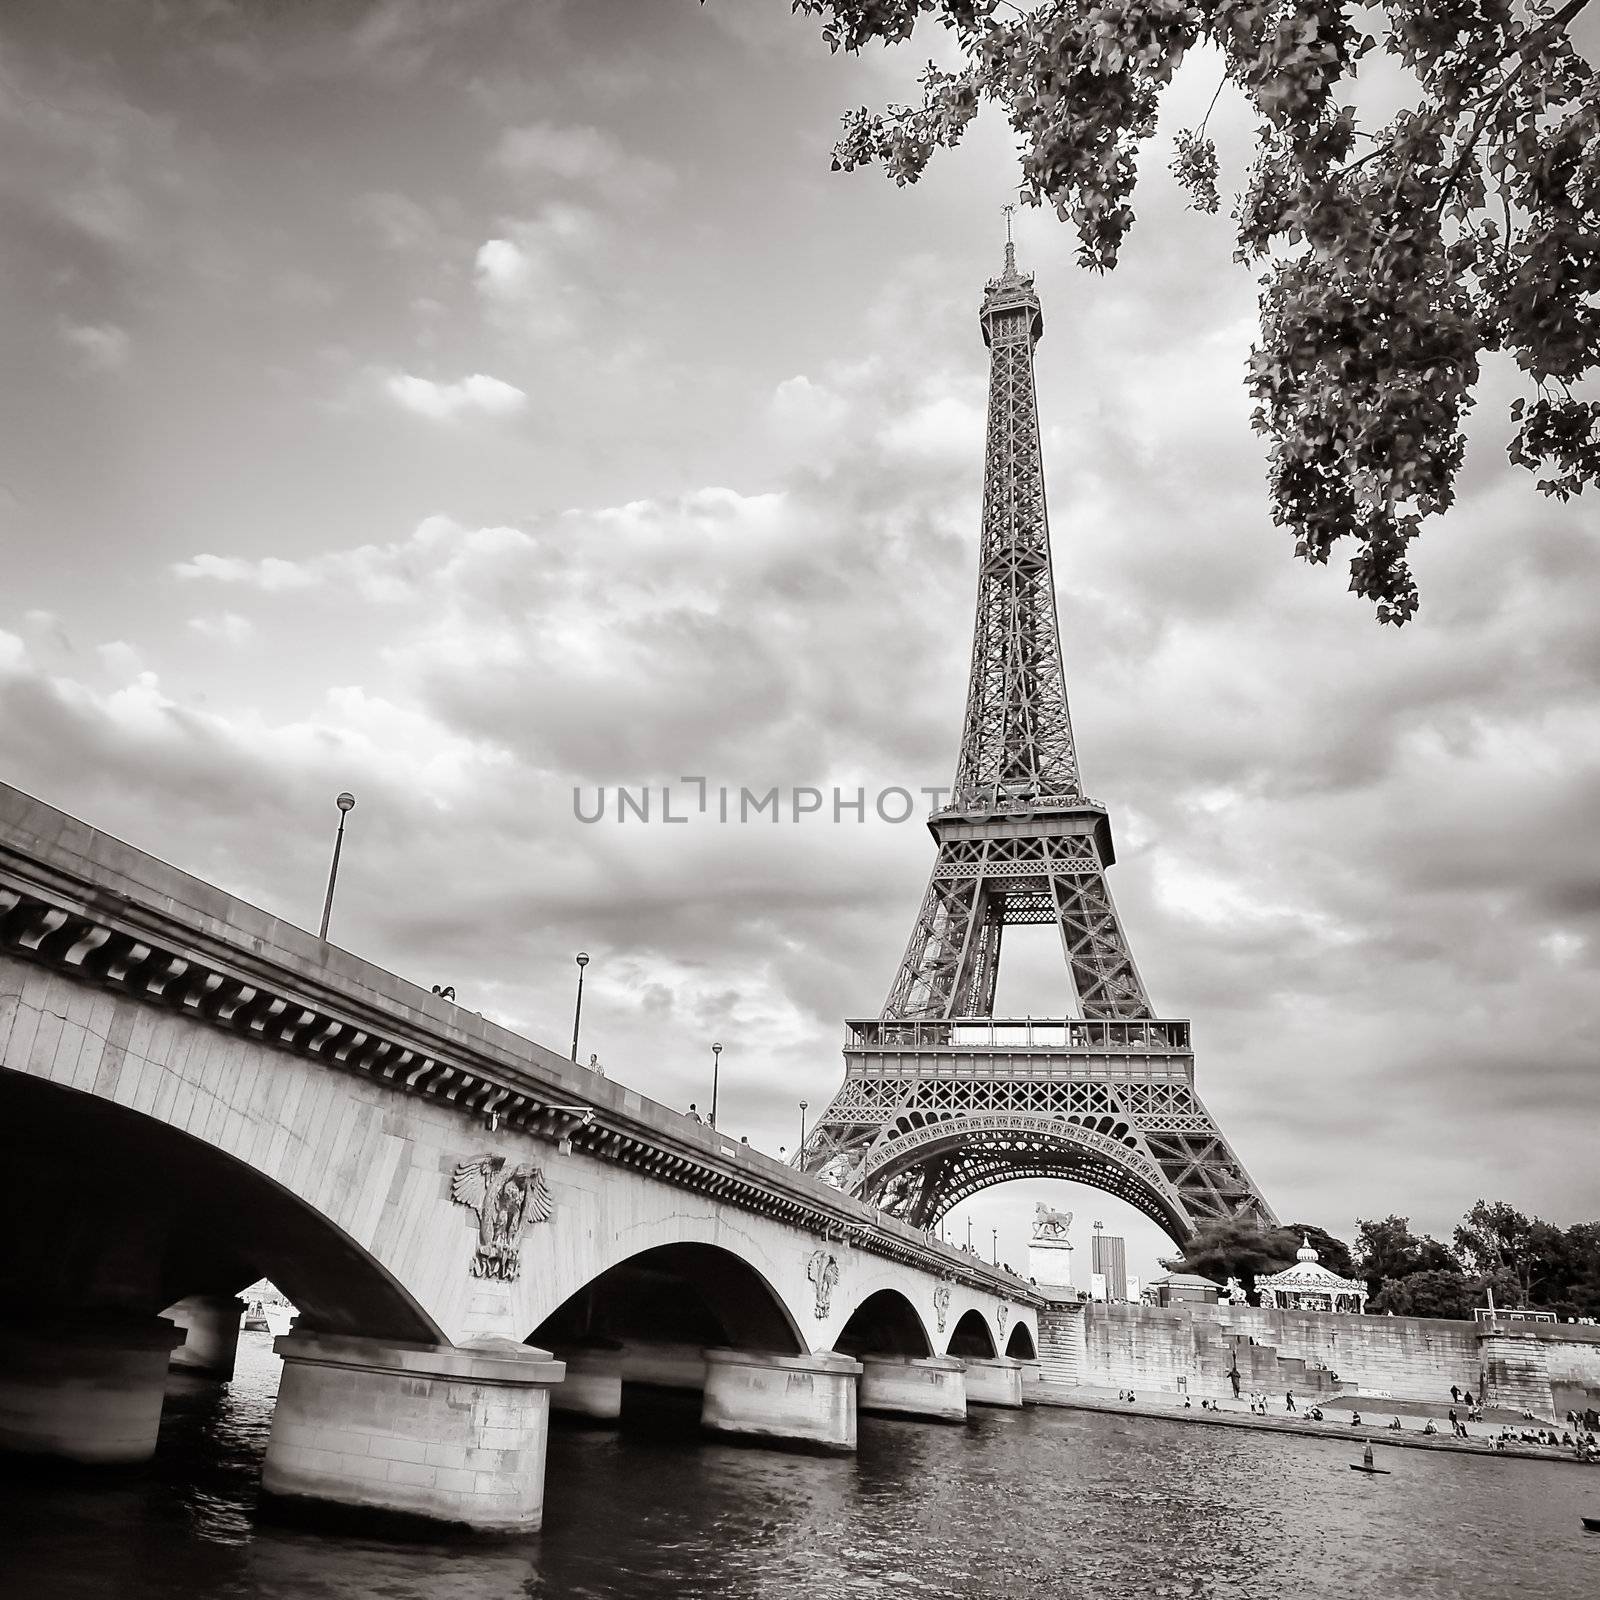 Eiffel tower monochrome view with river and bridge, Paris, France